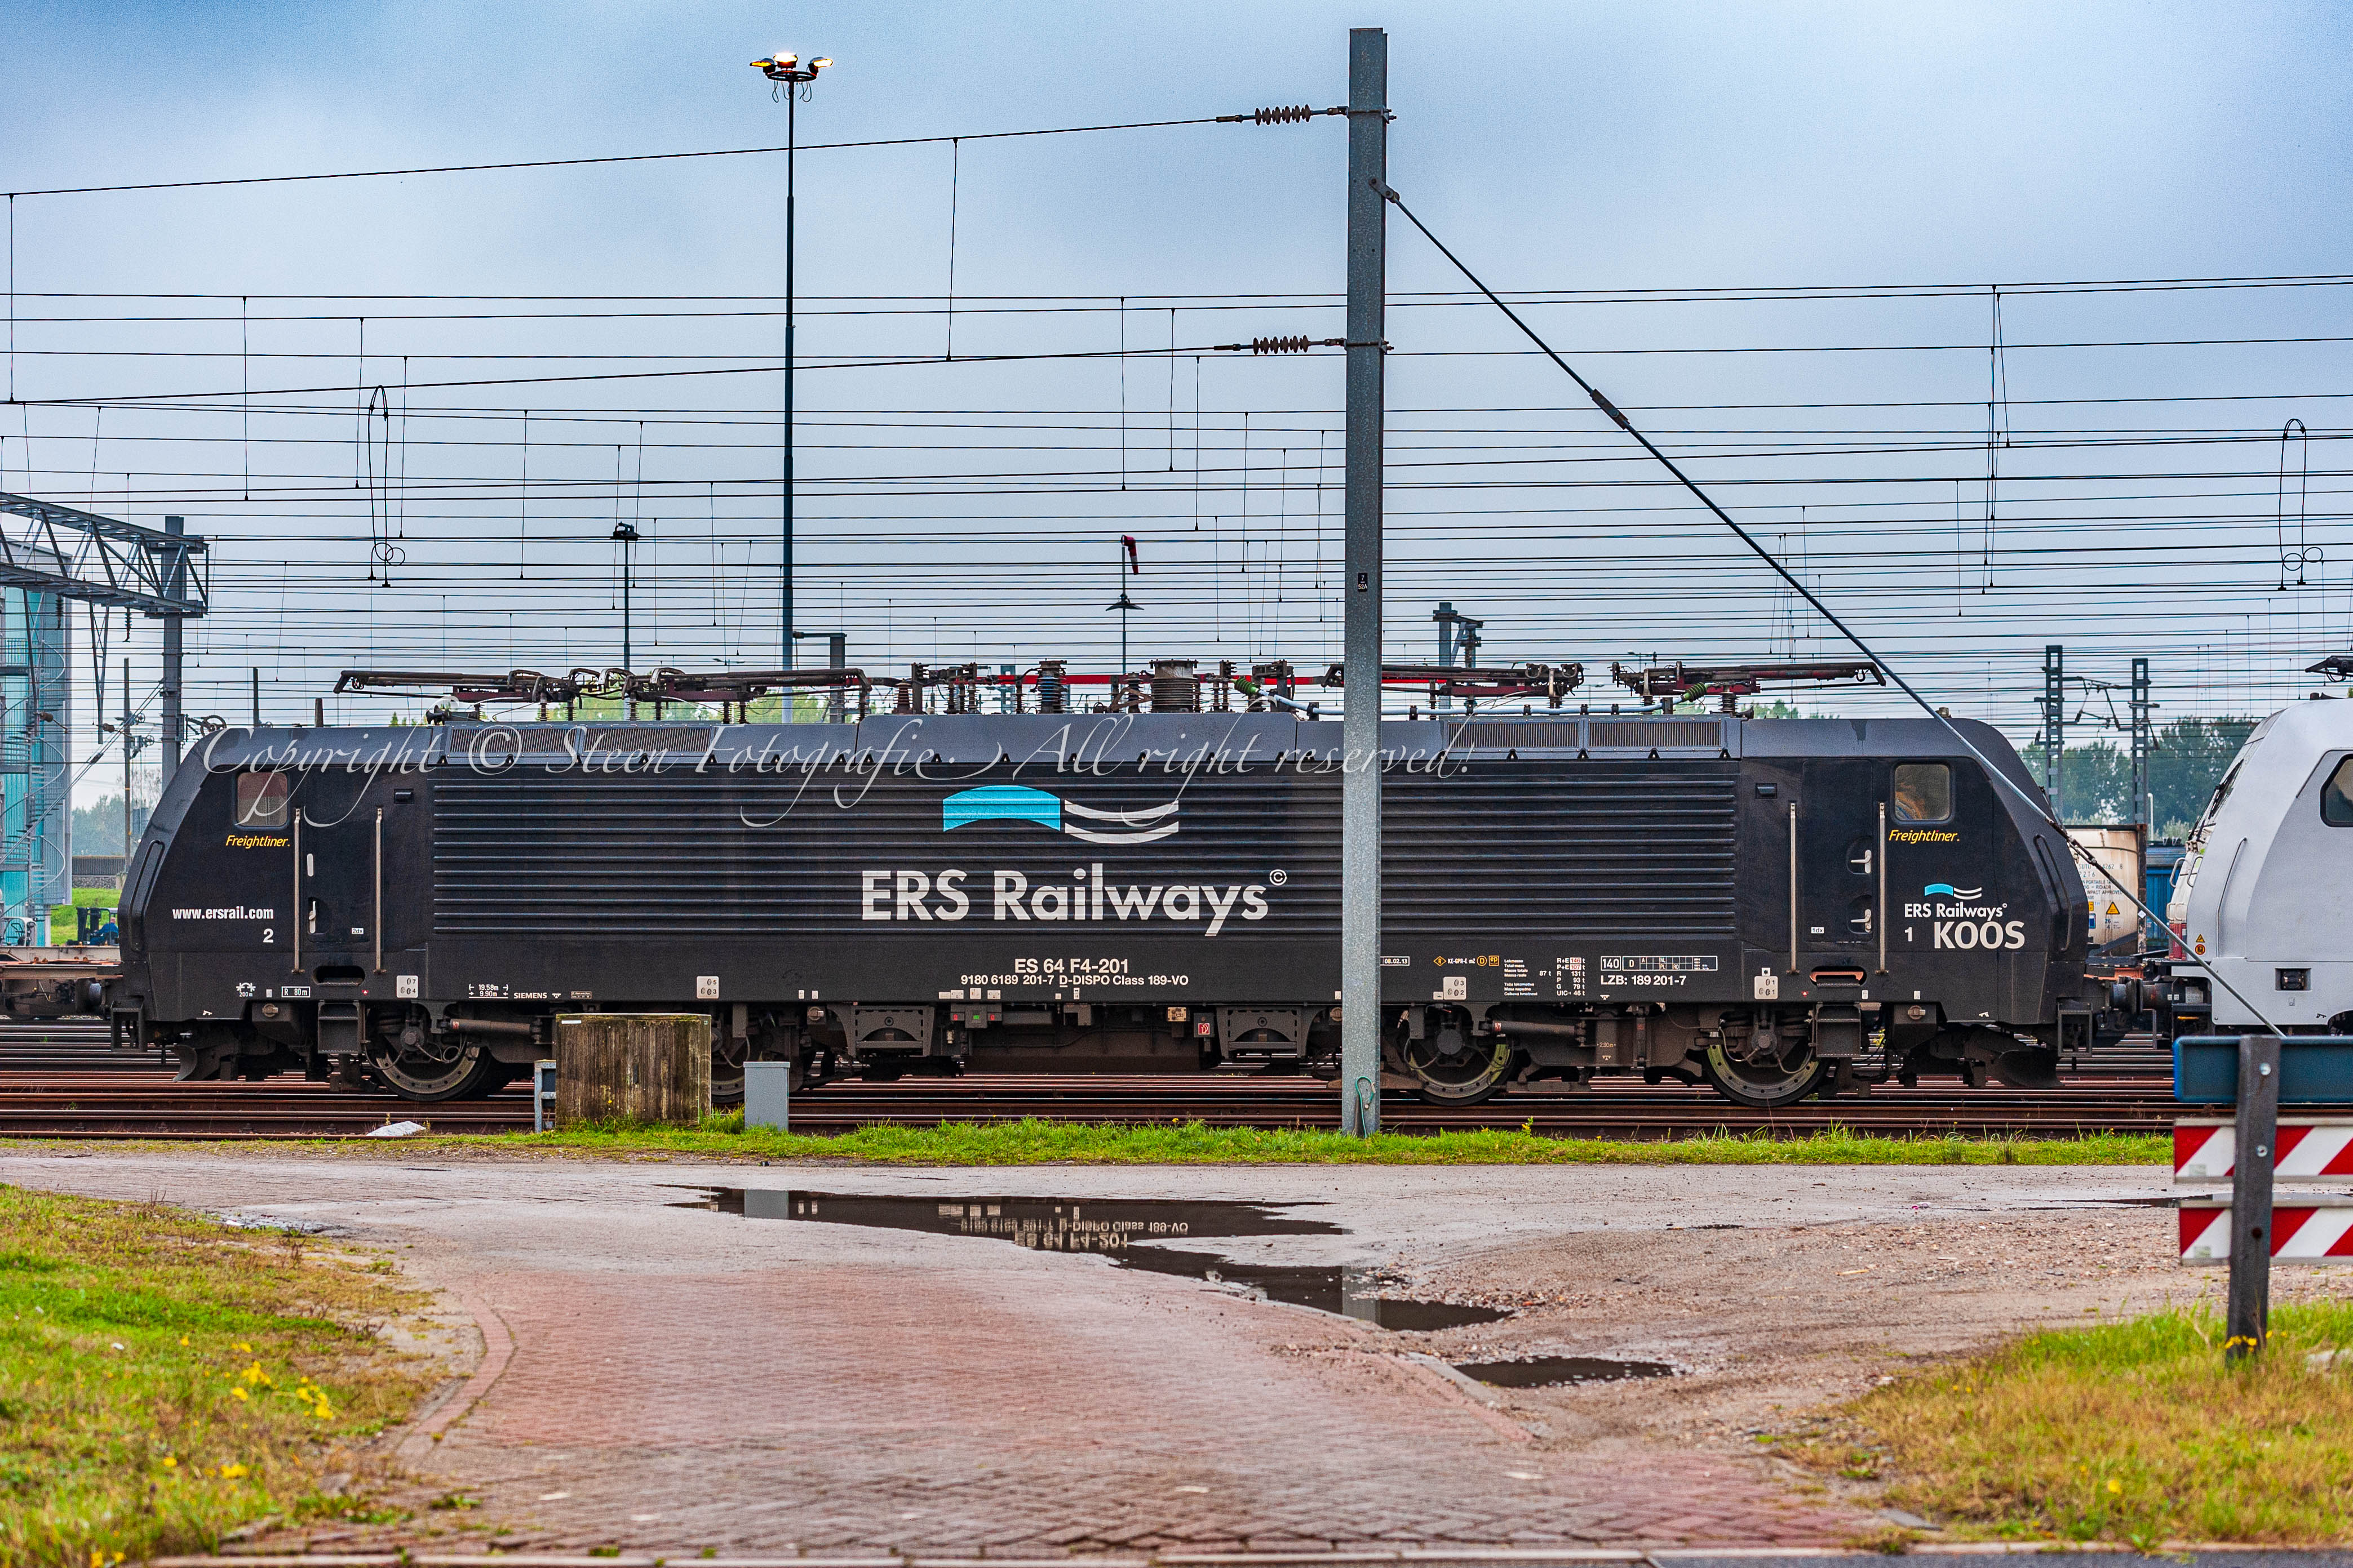 ERS Railways, 189 201